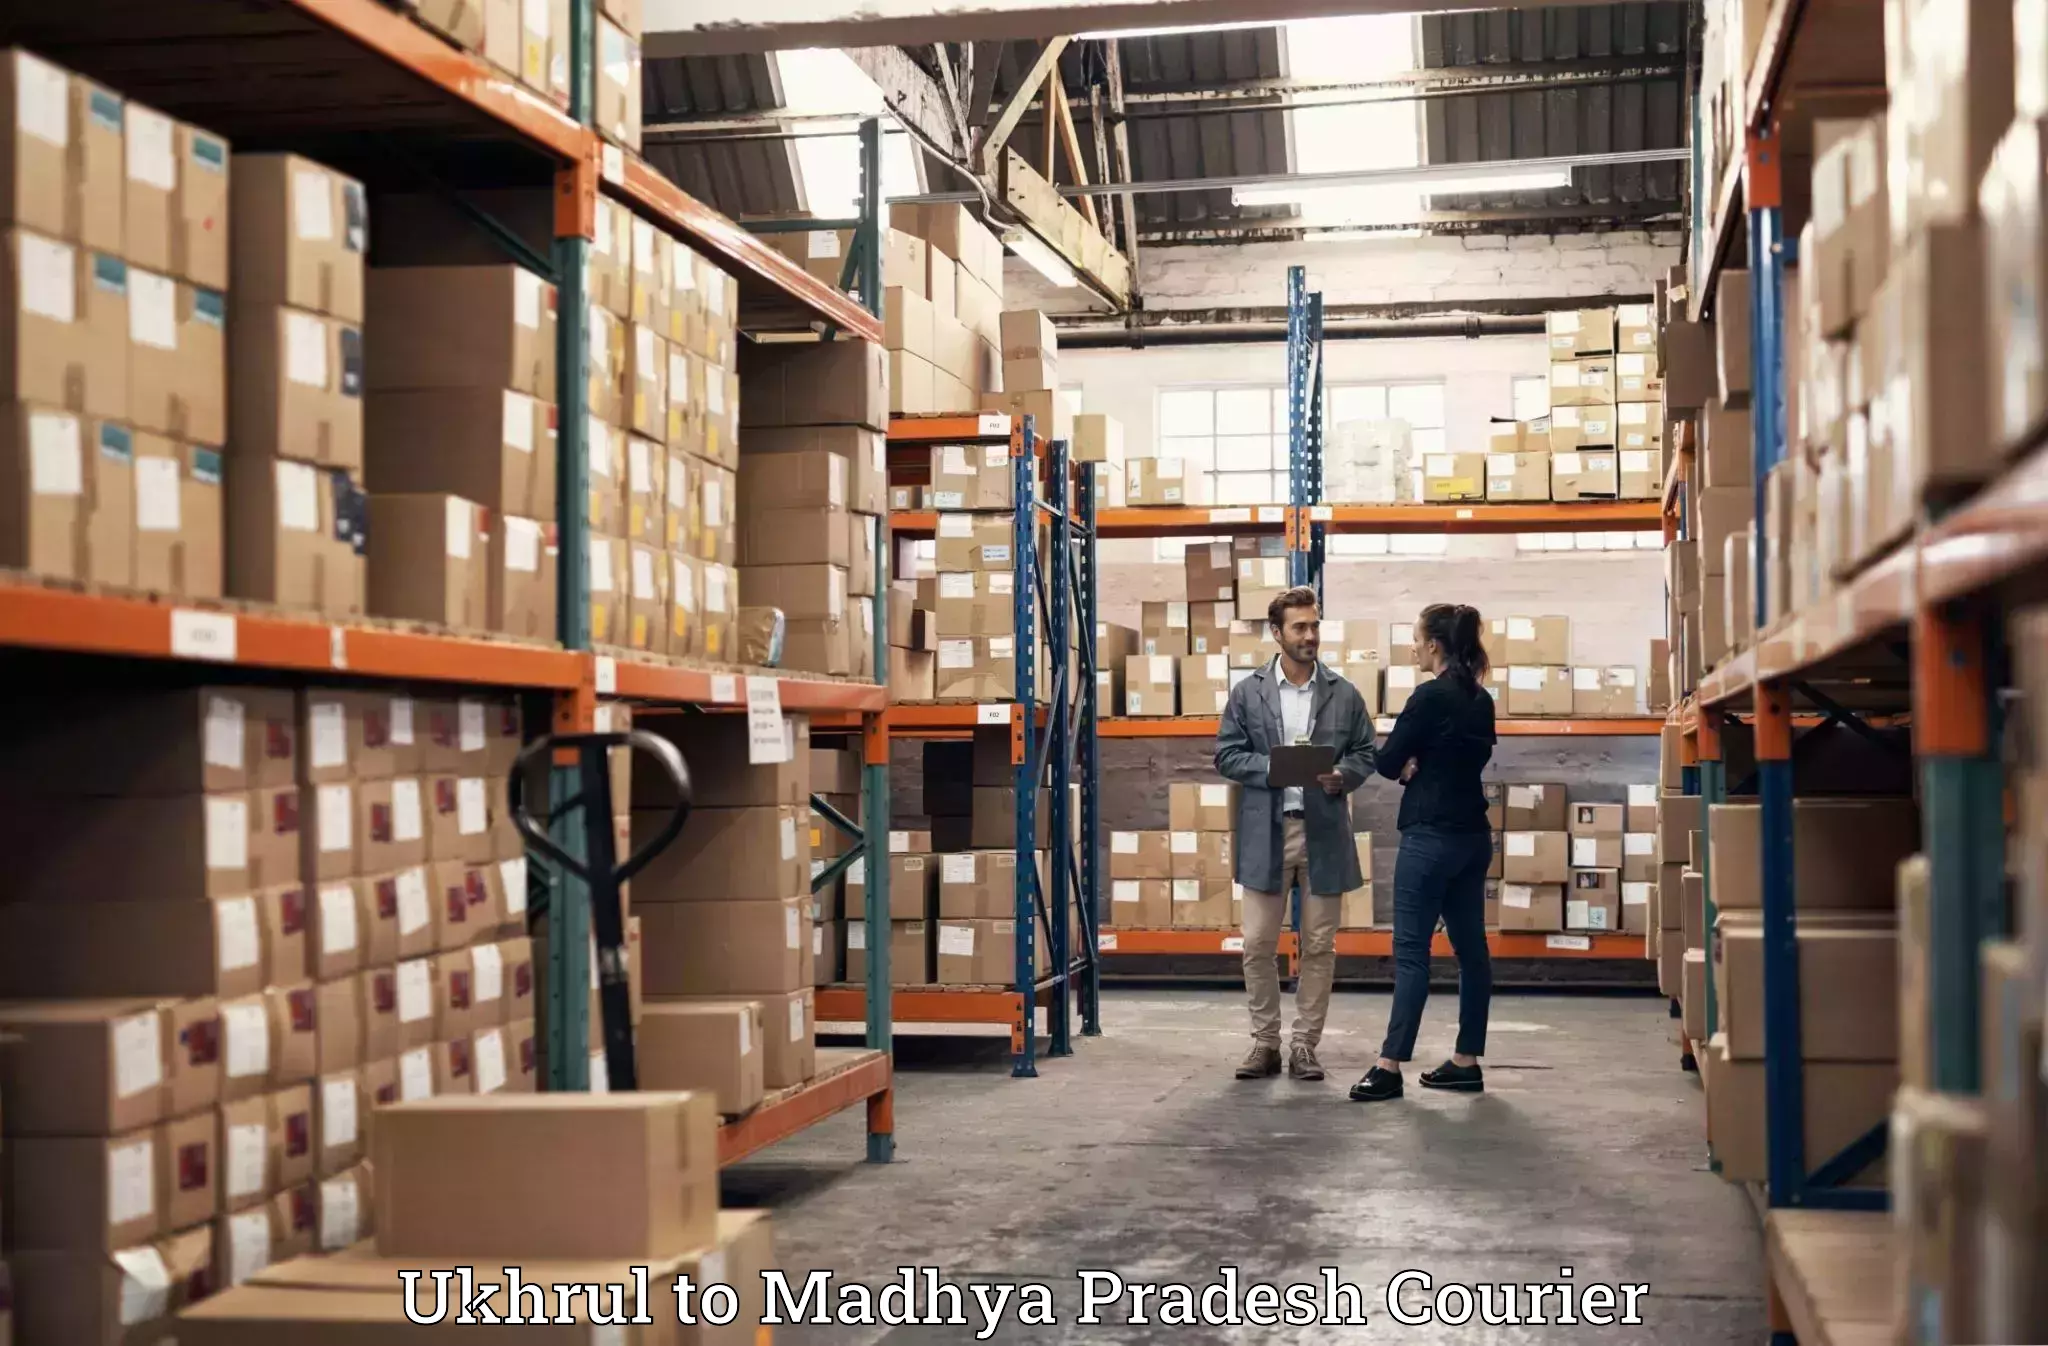 Luggage shipment specialists Ukhrul to Madhya Pradesh